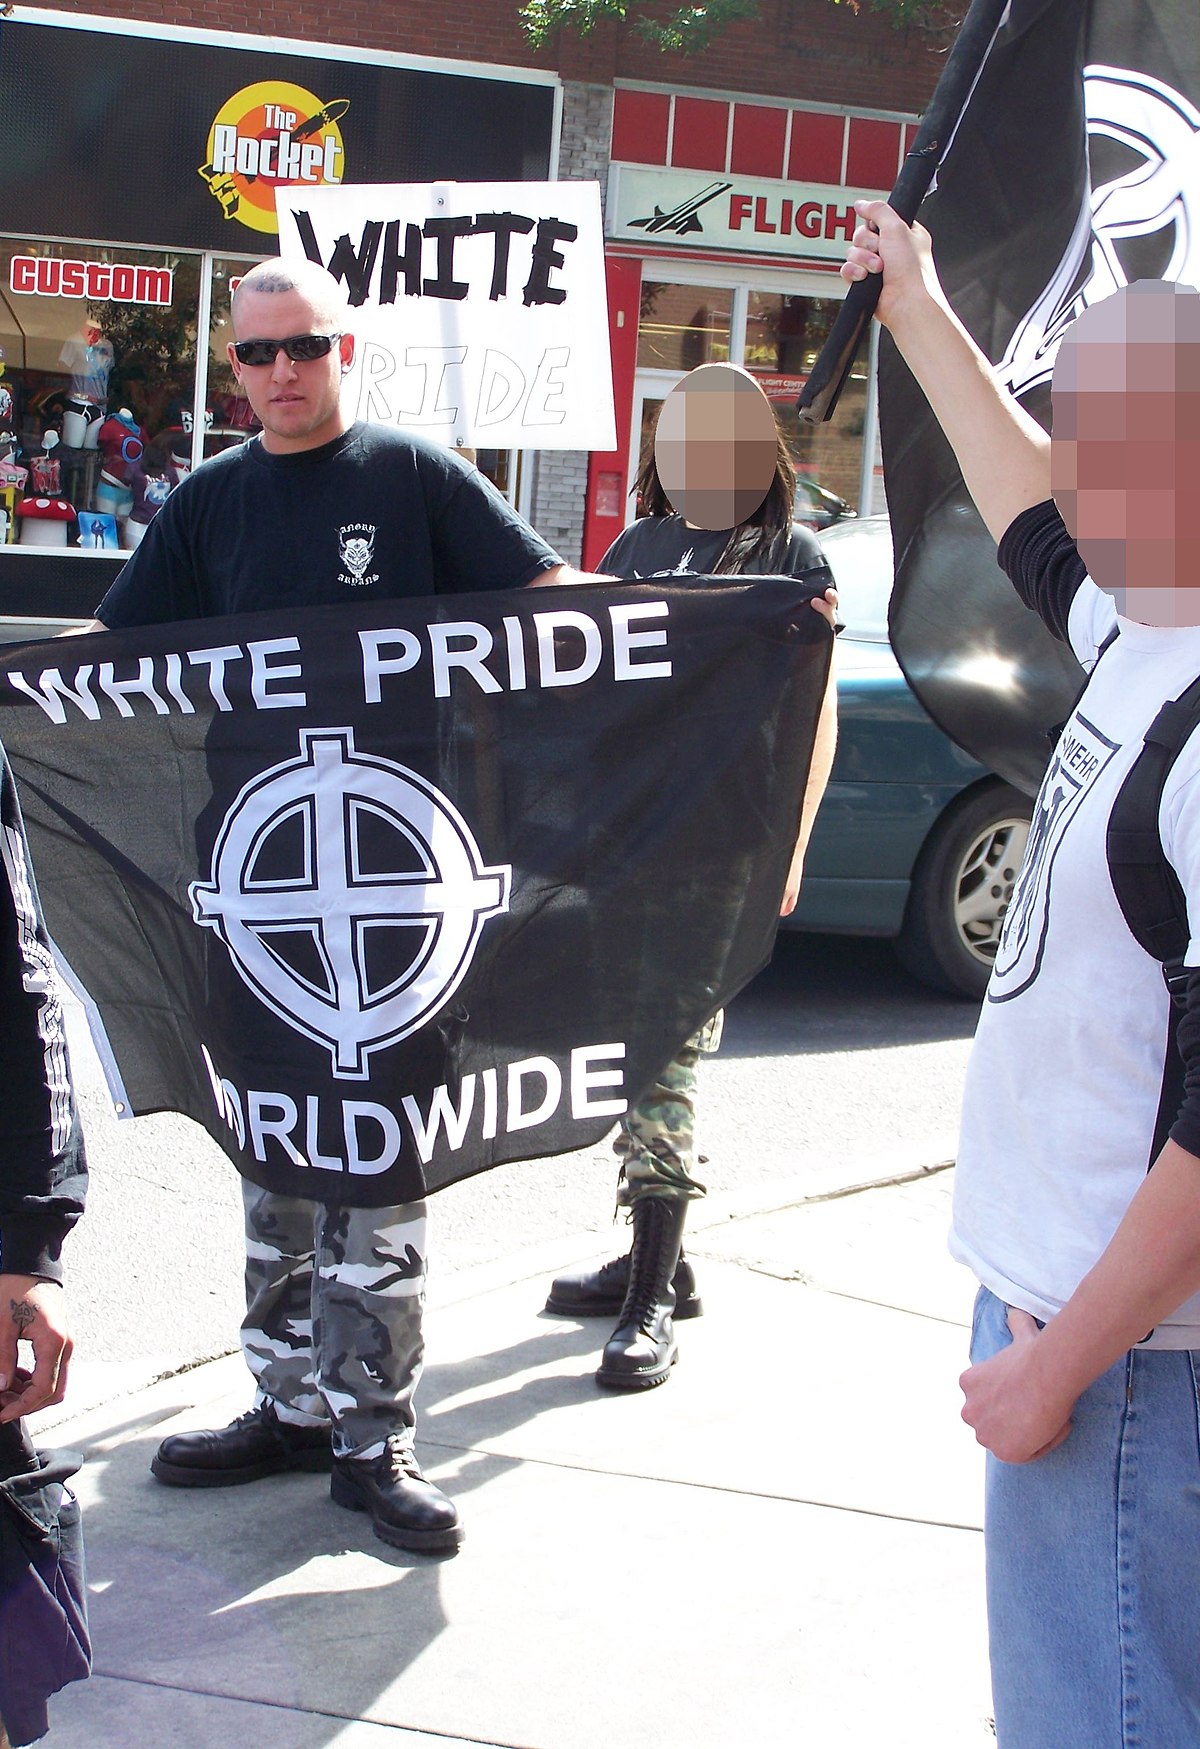 White Pride Wikipedia - roblox kkk hood